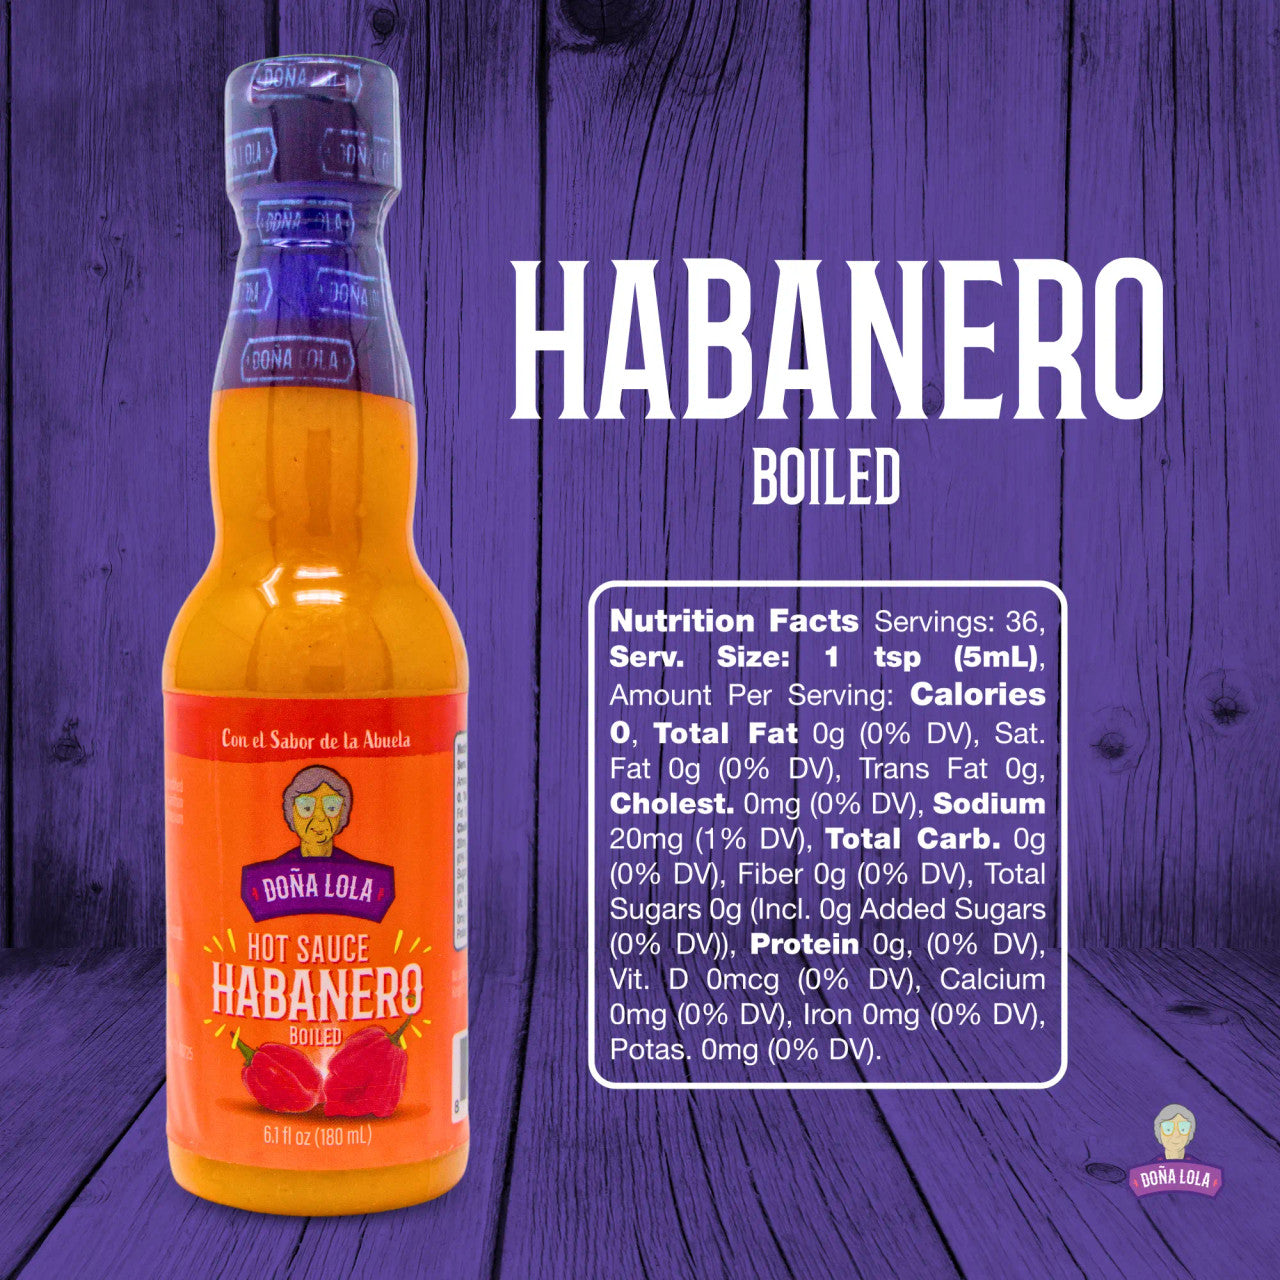 Habanero Boiled (Hot Sauce)